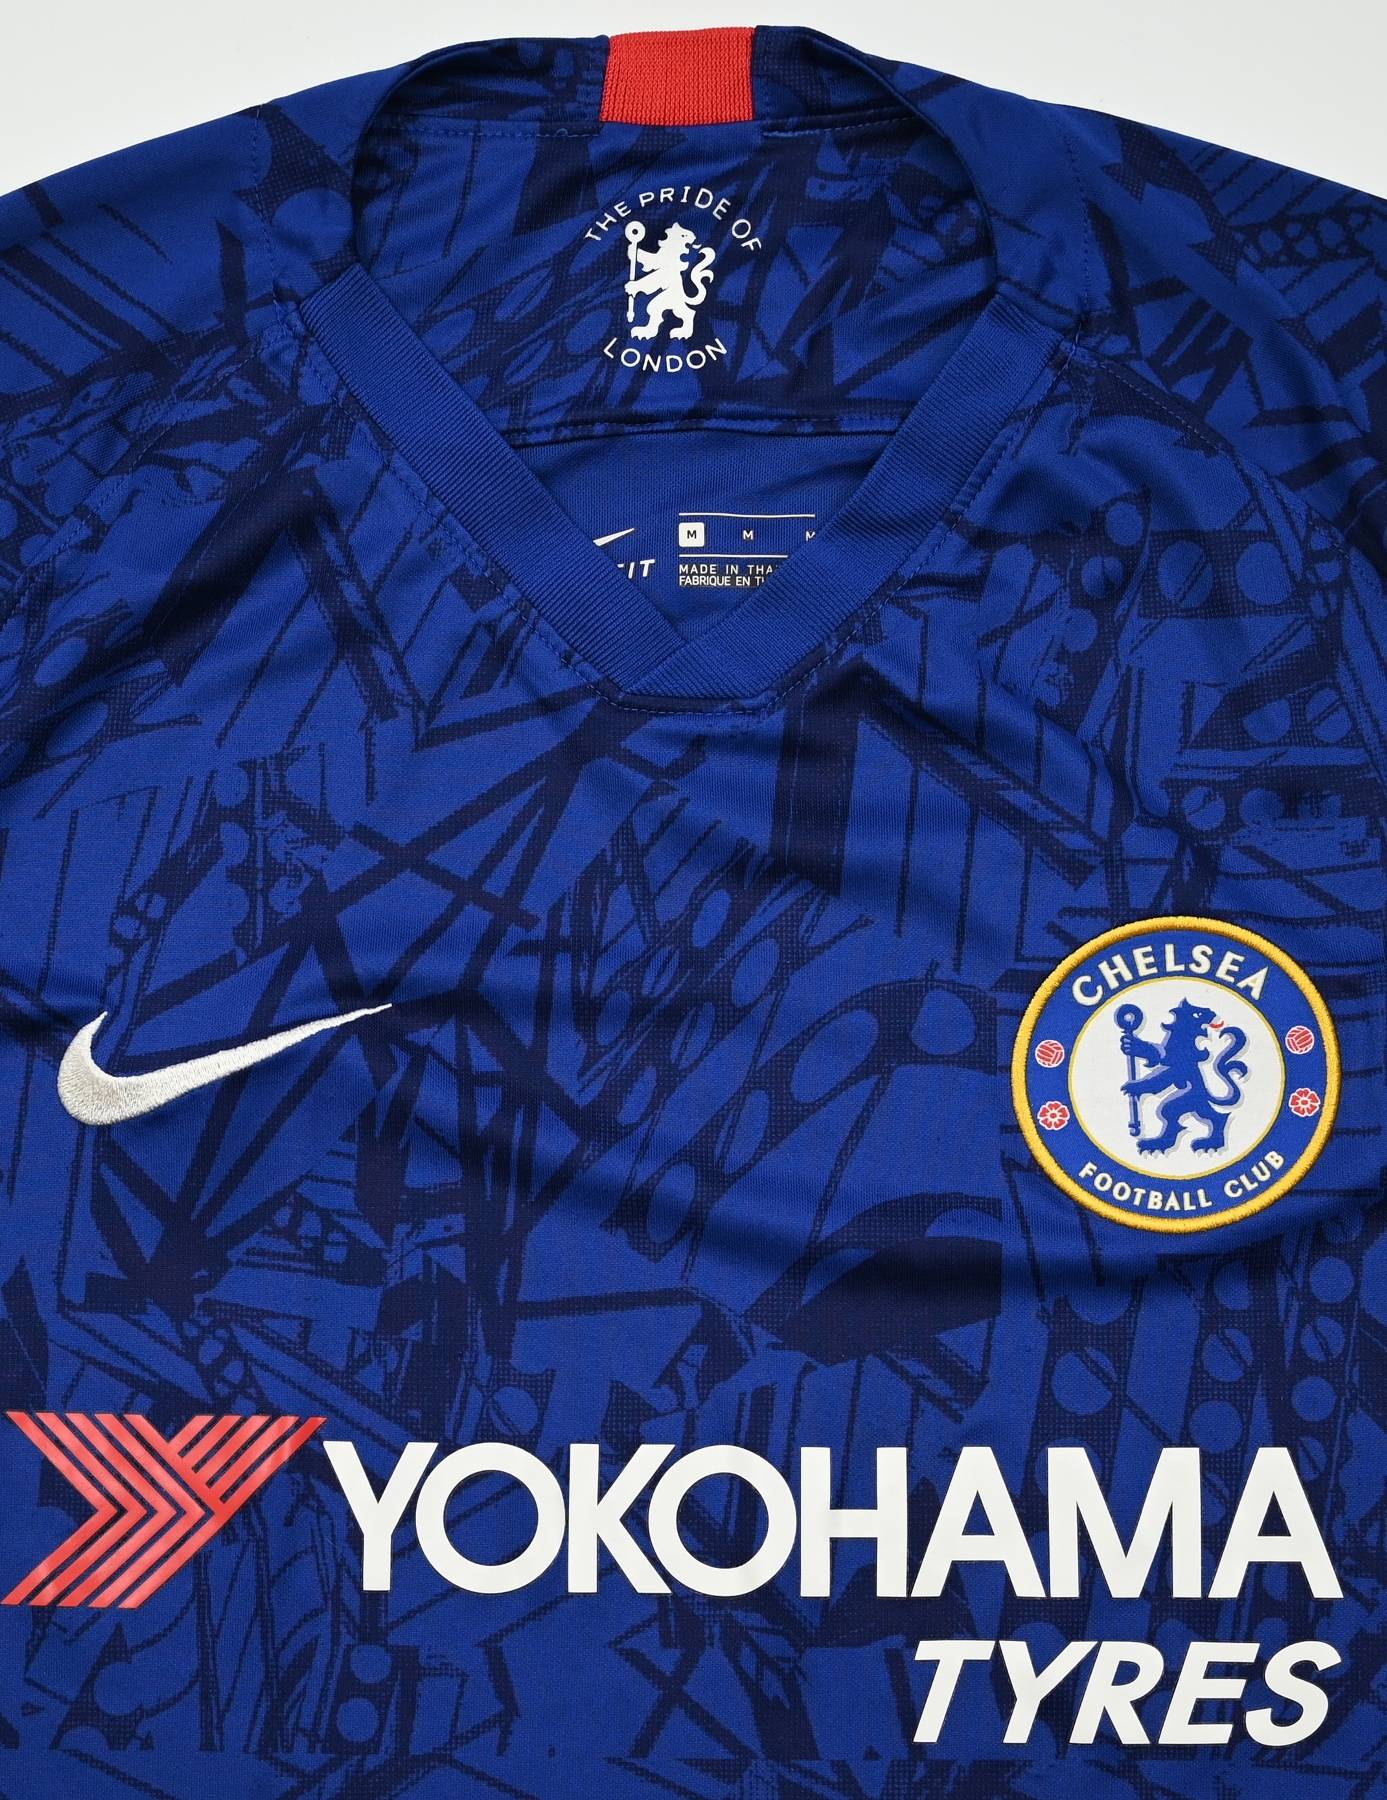 Tisan Designs on X: #RetoRede London FC (Chelsea FC) #London #LondonFC # Chelsea #ChelseaFC #PES #PES2019 #KONAMI #BLUES #Nike   / X